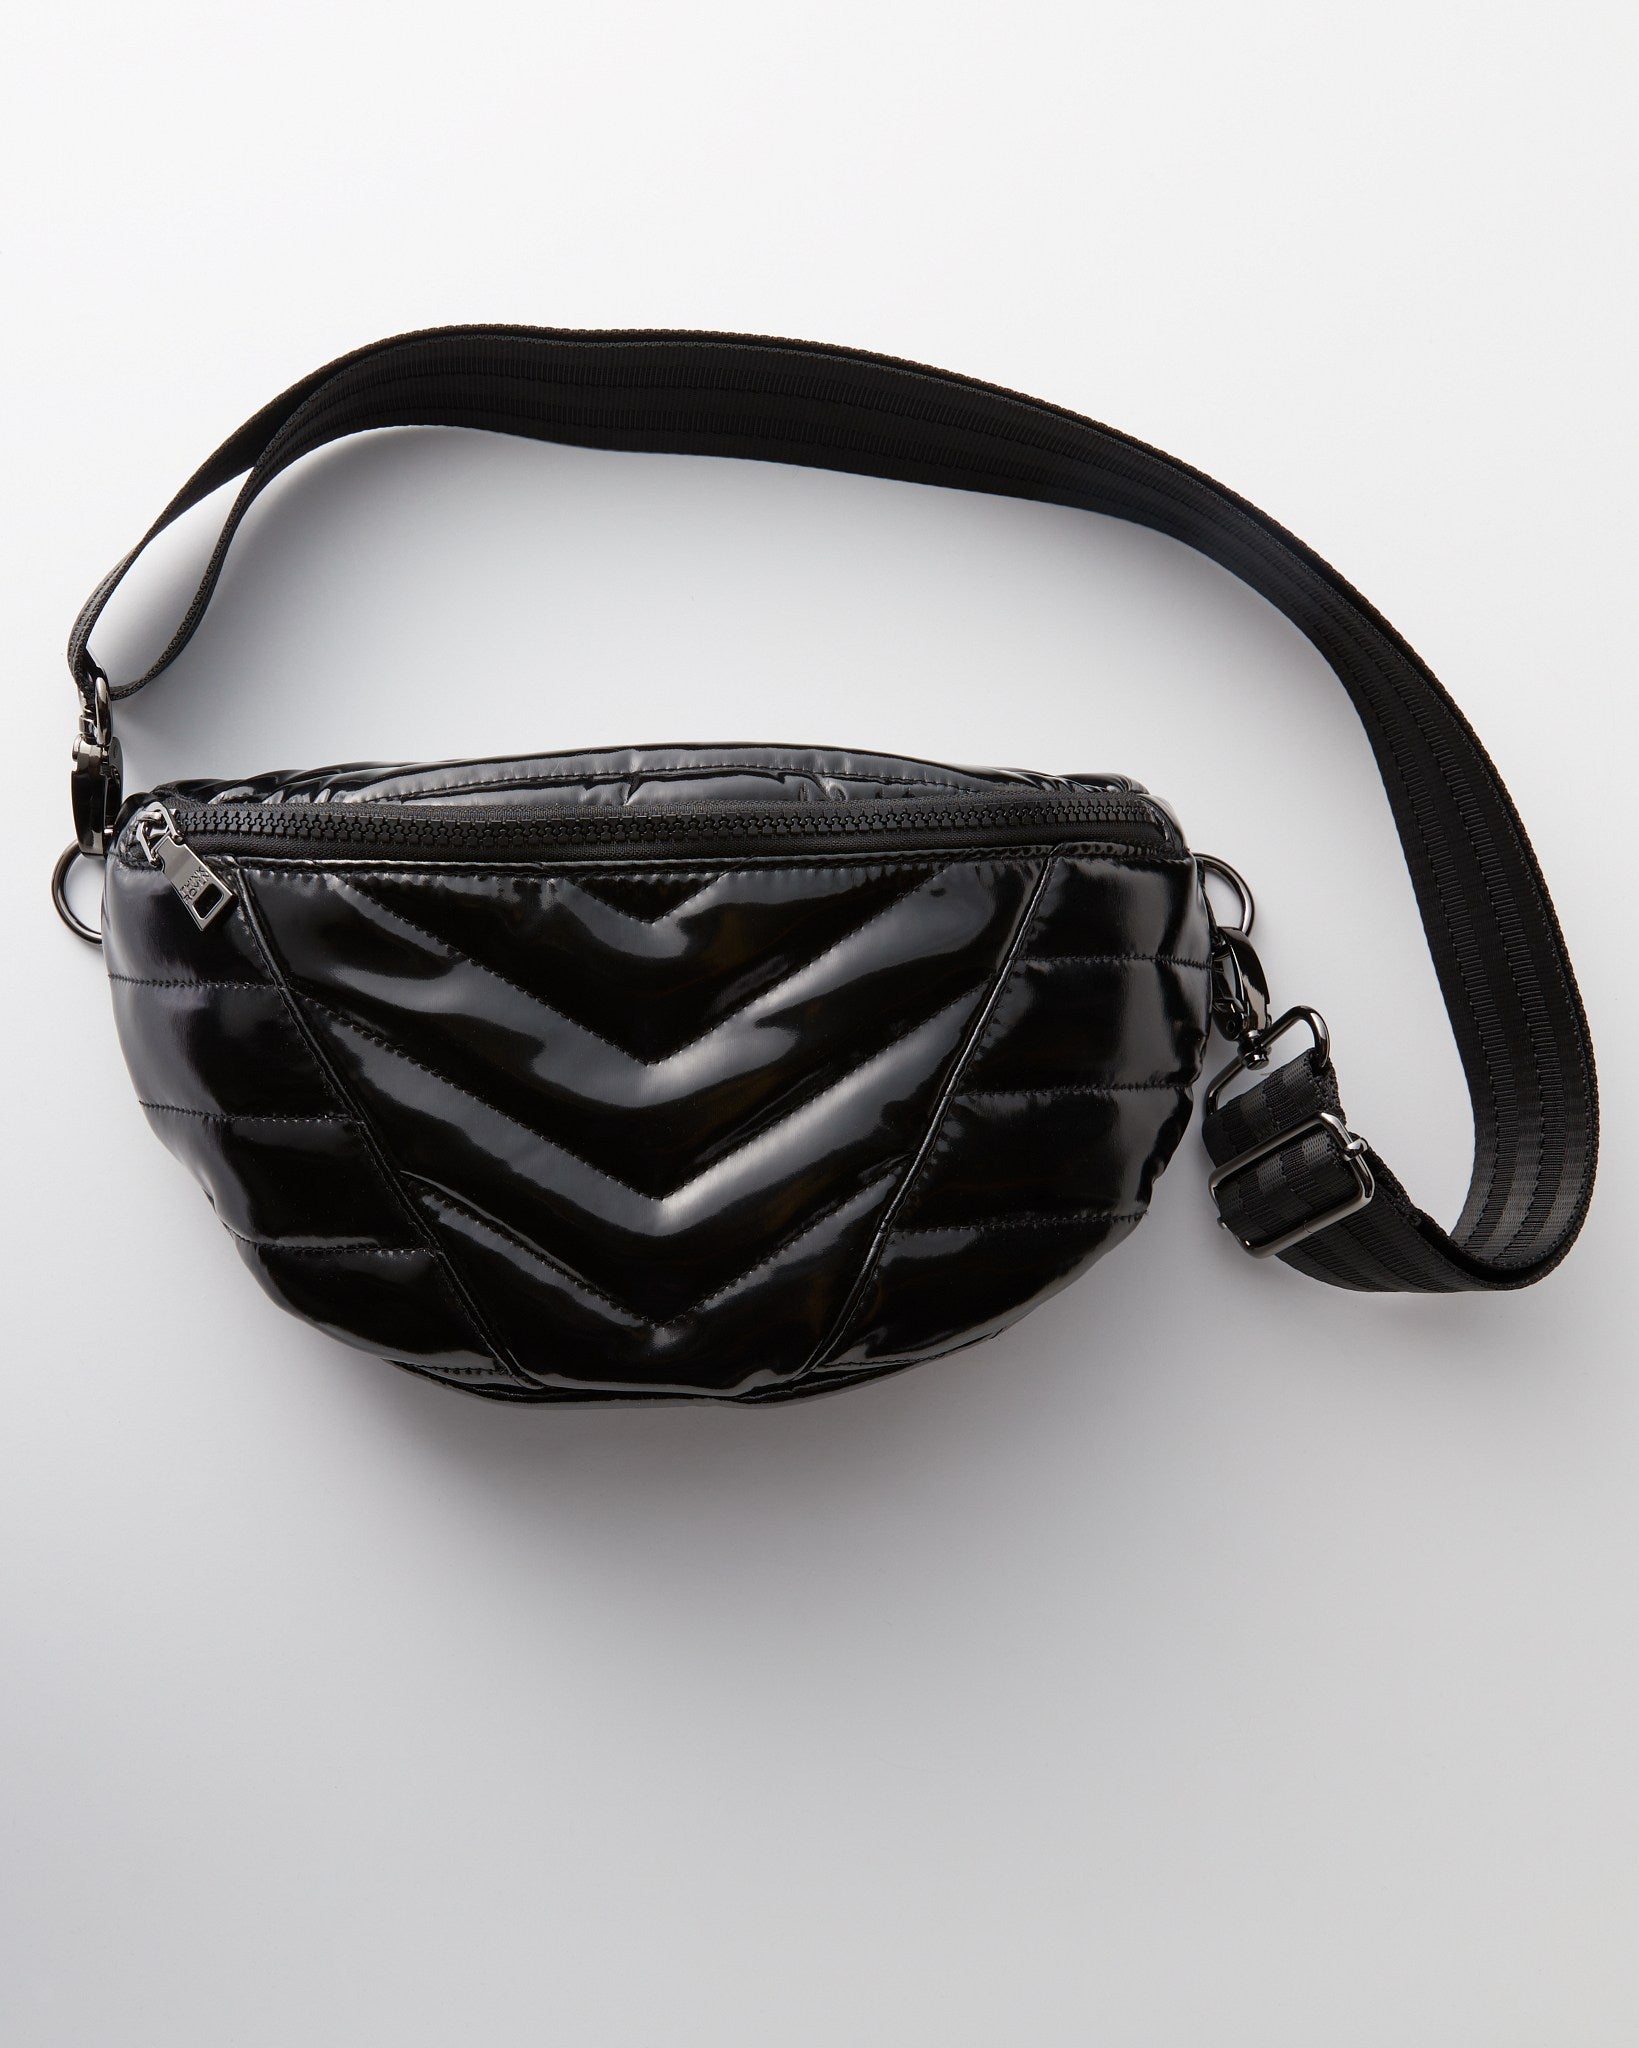 Think Royln - Little Runway Handbag Black Patent